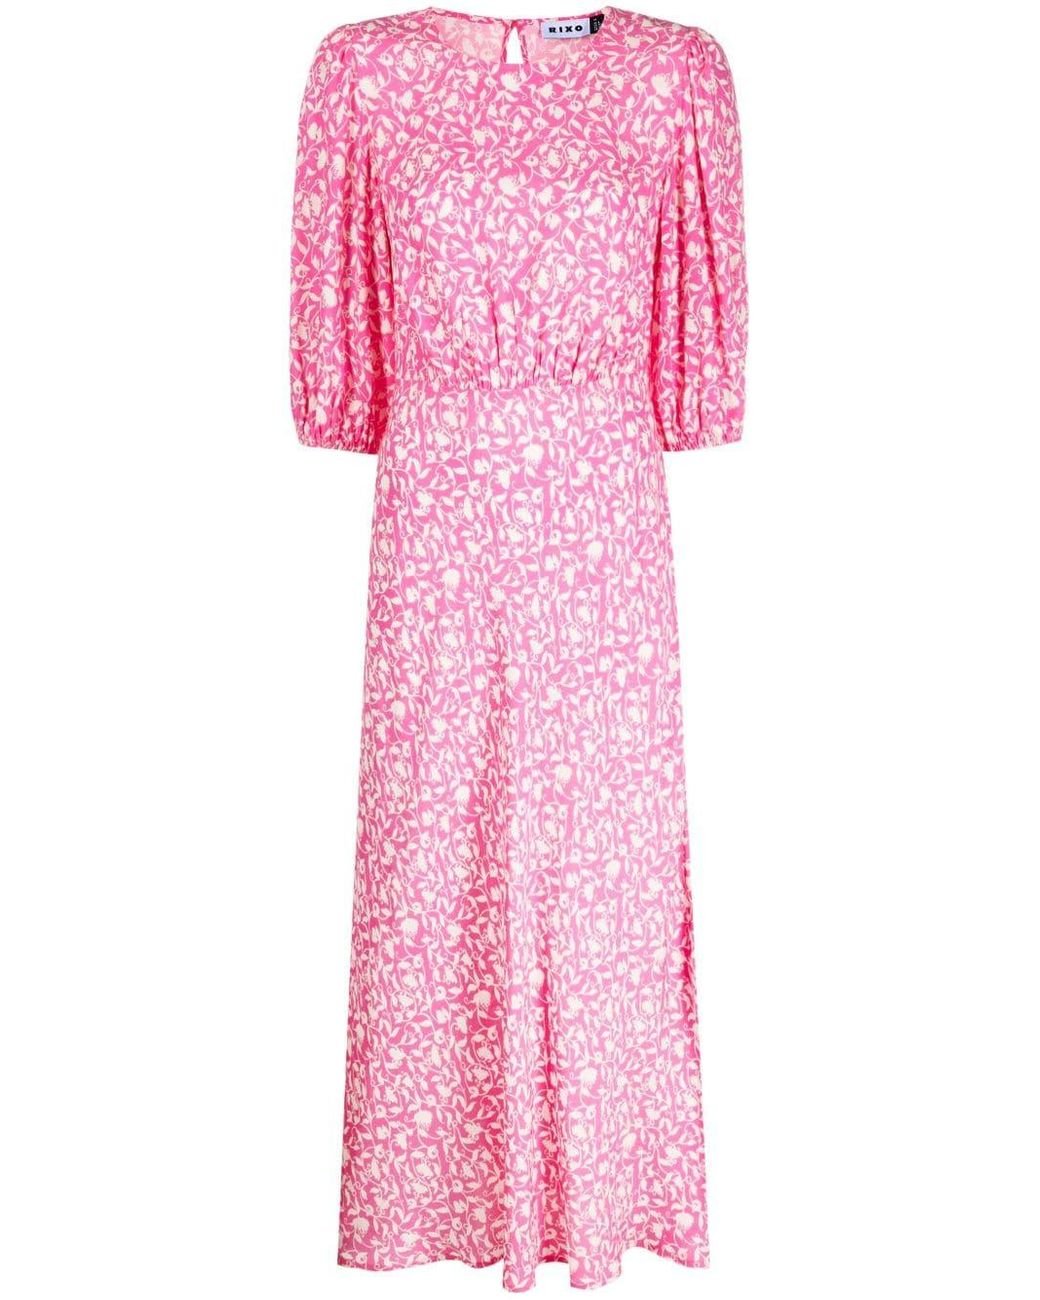 RIXO London Floral-print Balloon-sleeve Dress in Pink | Lyst